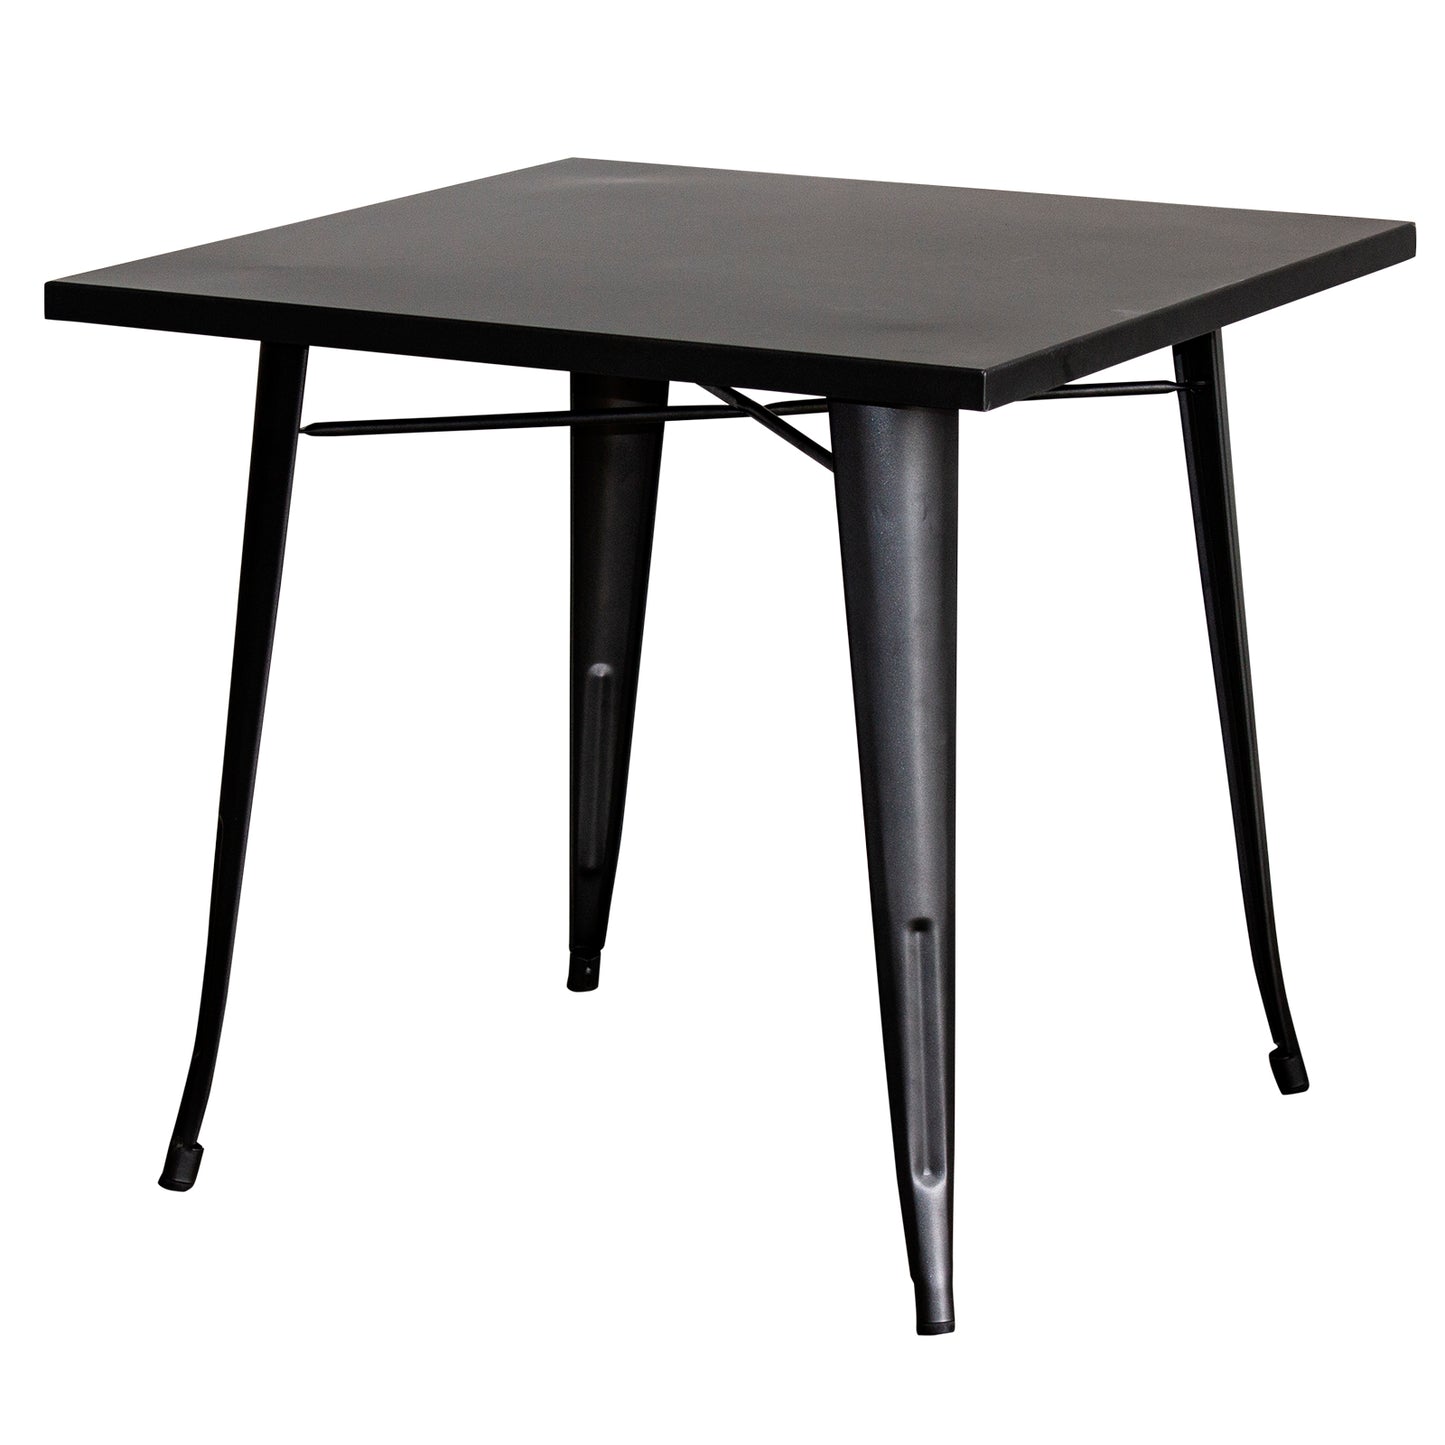 5PC Belvedere Table Florence Chair & Rho Stool Set - Onyx Matt Black